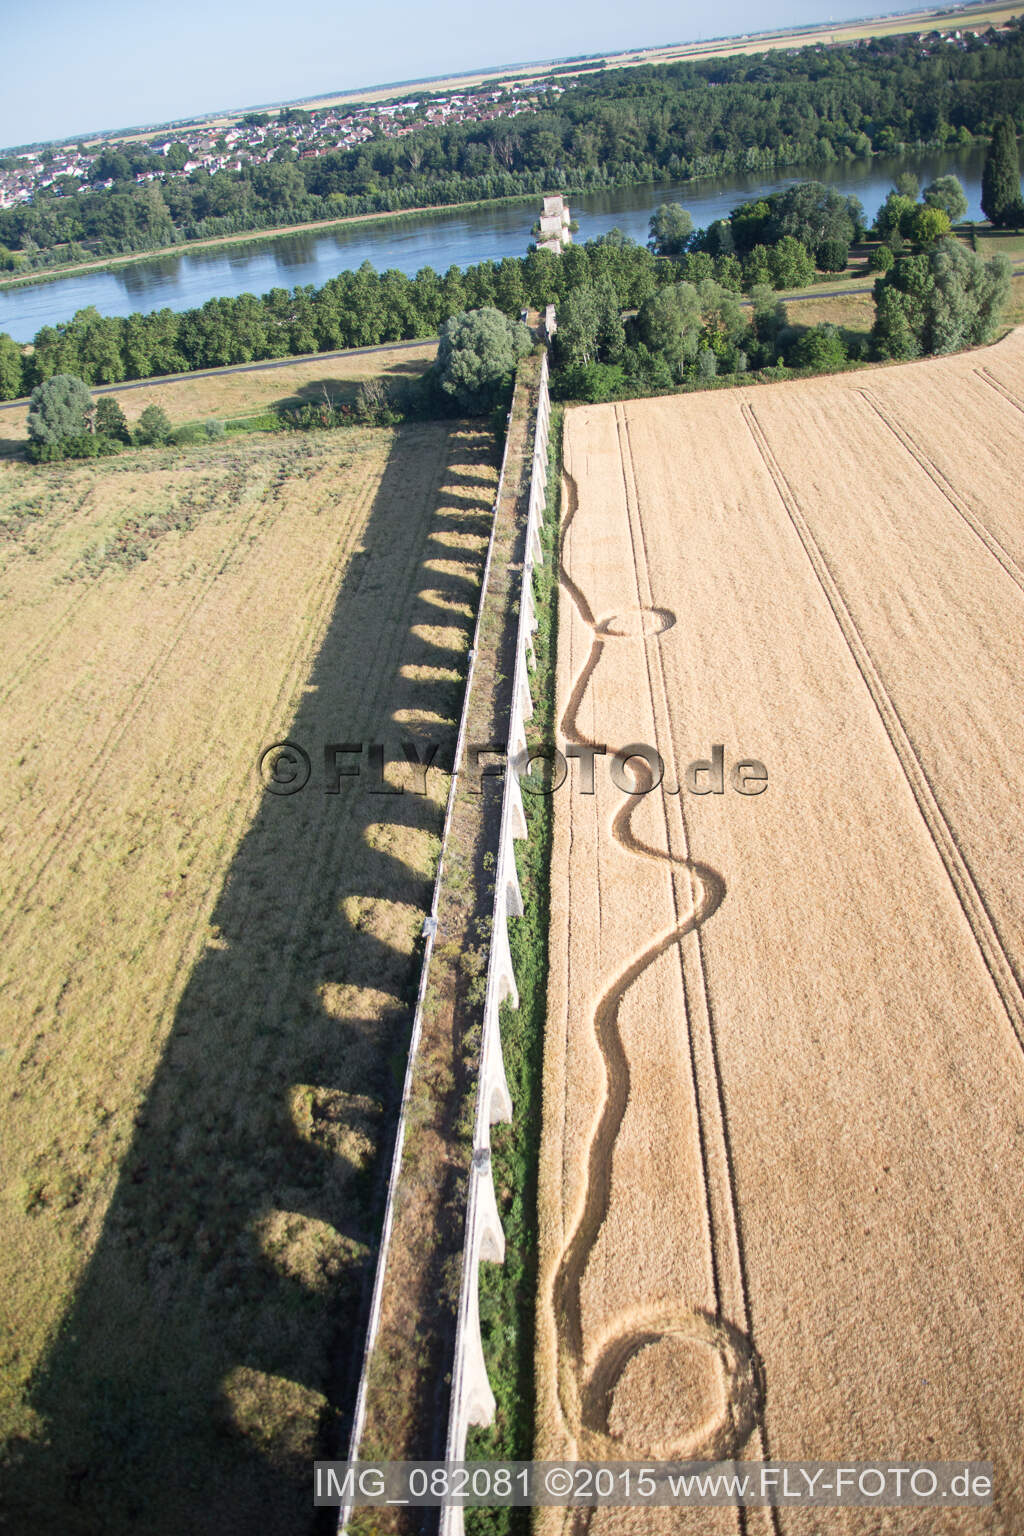 Viadukt bei Vineuil/Loire (F-Centre) im Bundesland Loir-et-Cher, Frankreich aus der Luft betrachtet